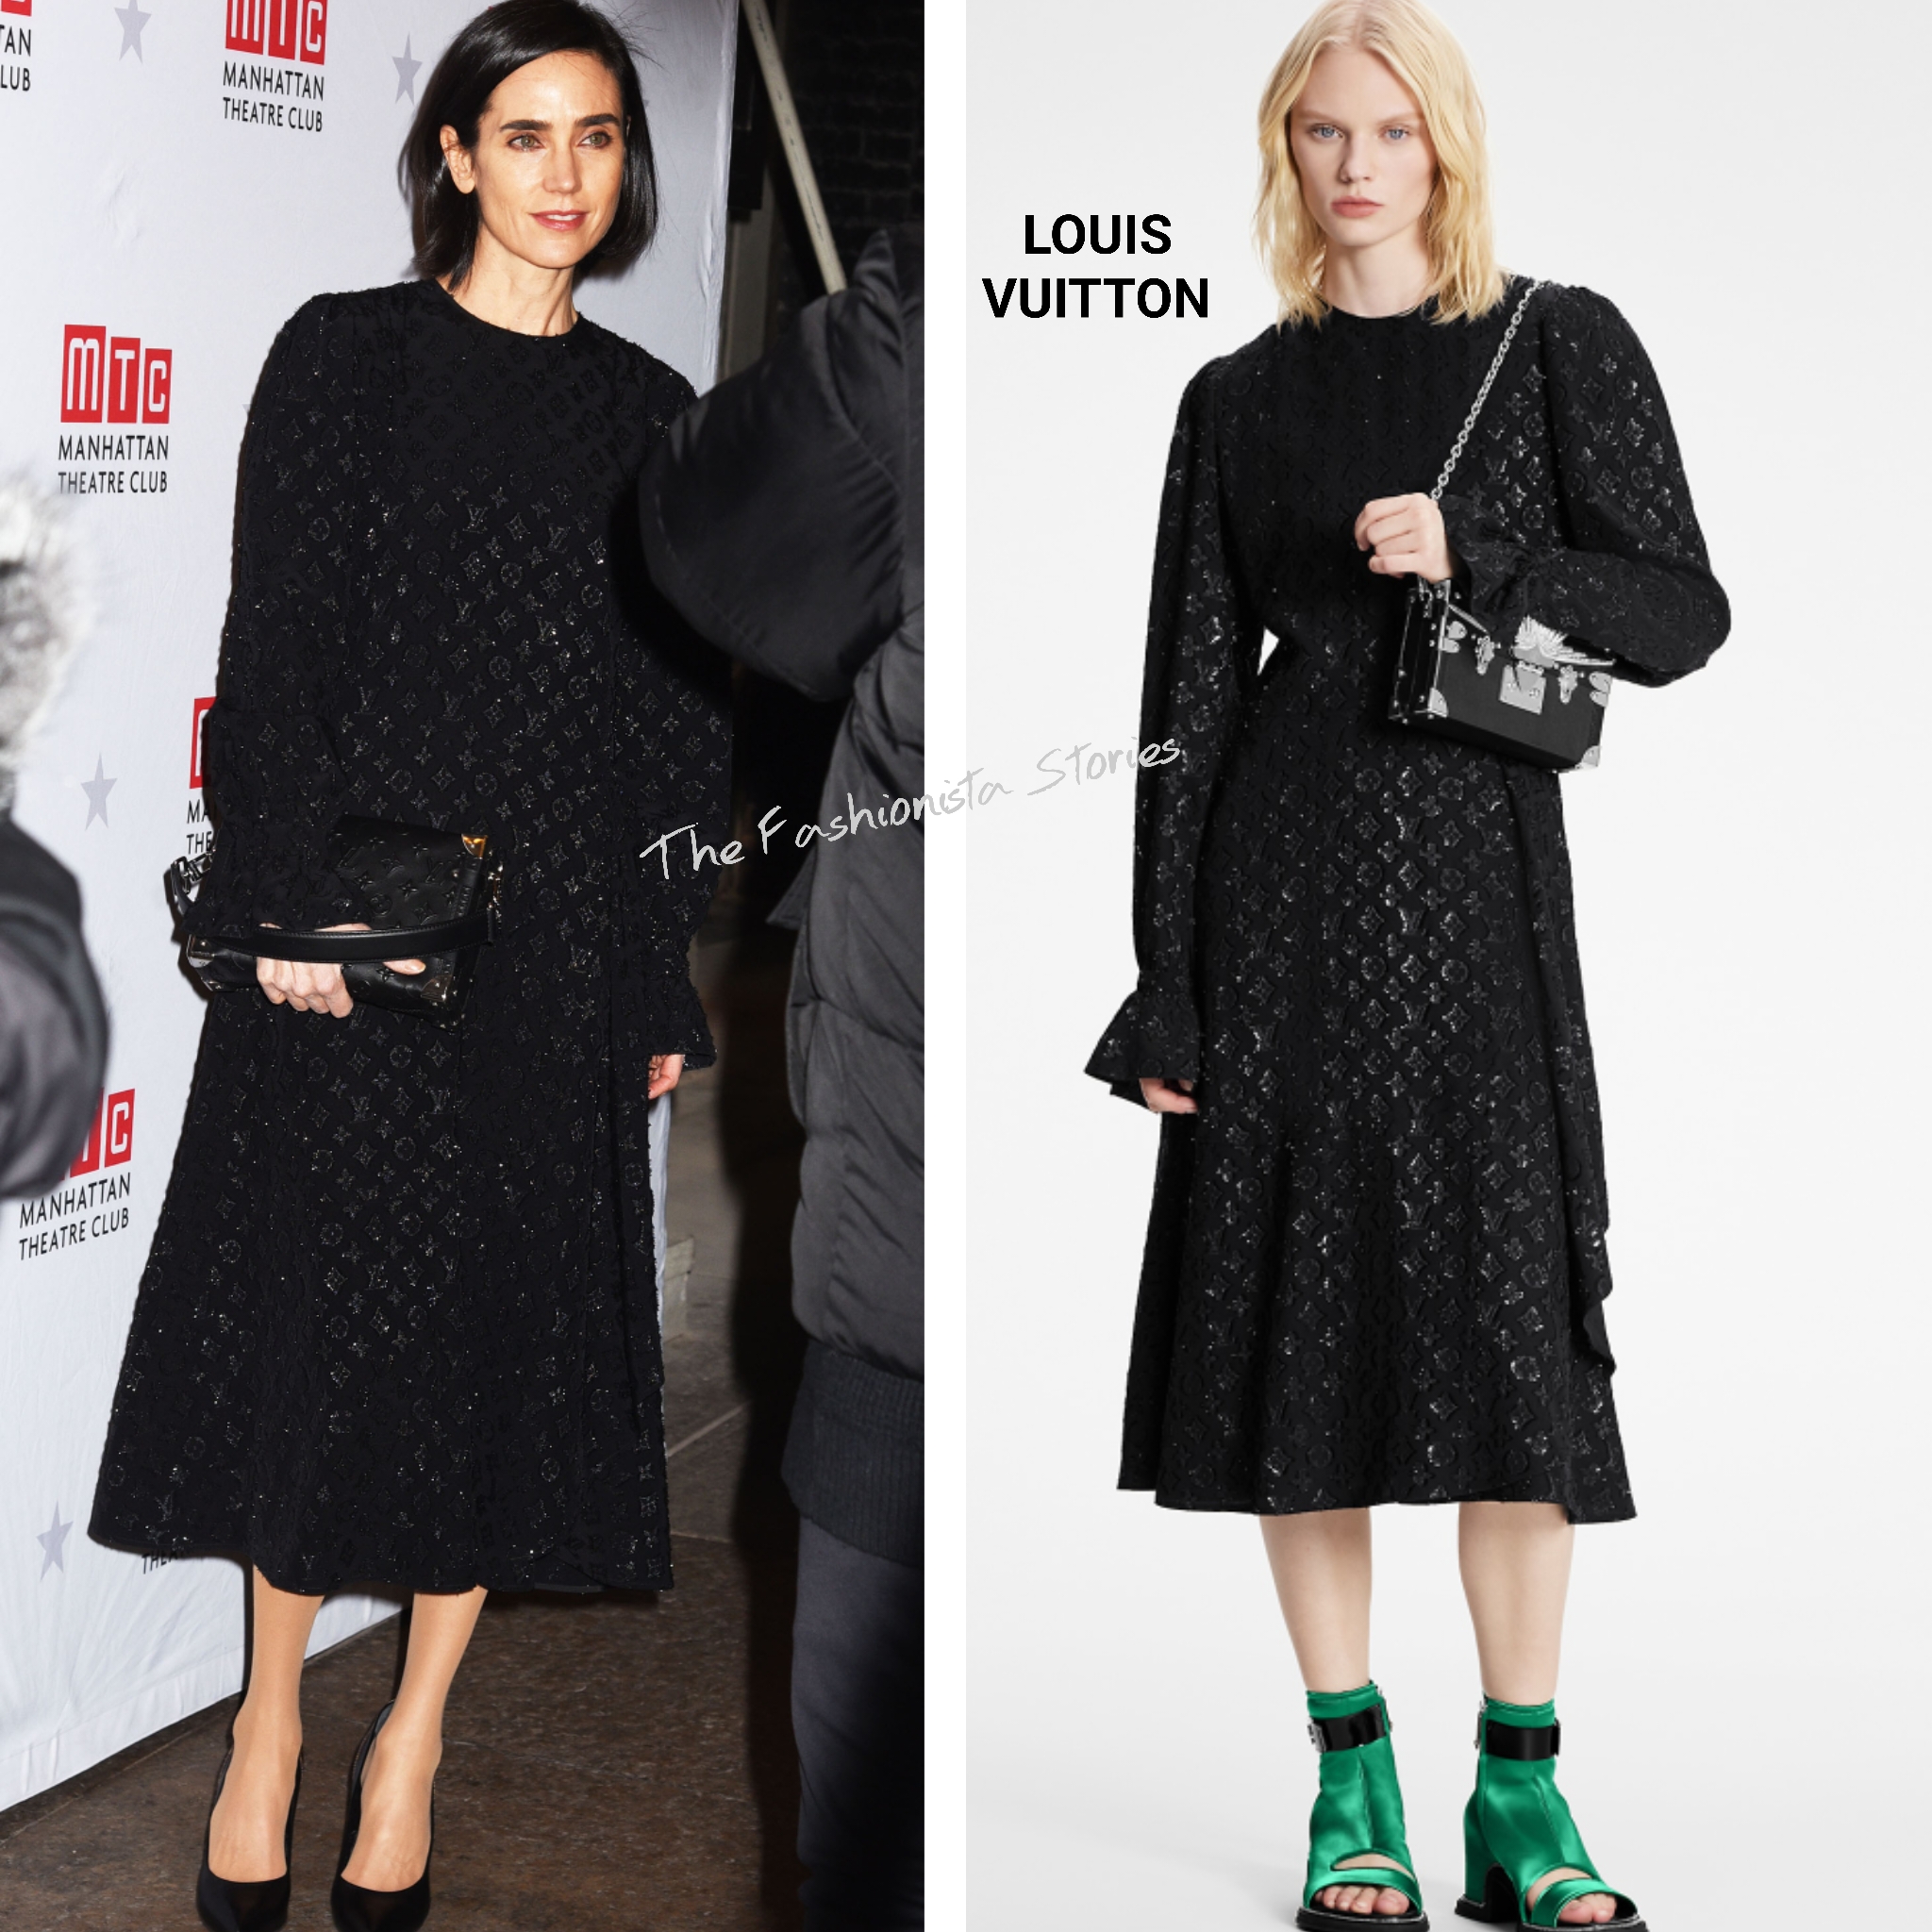 New Louis Vuitton campaign stars Jennifer Connelly